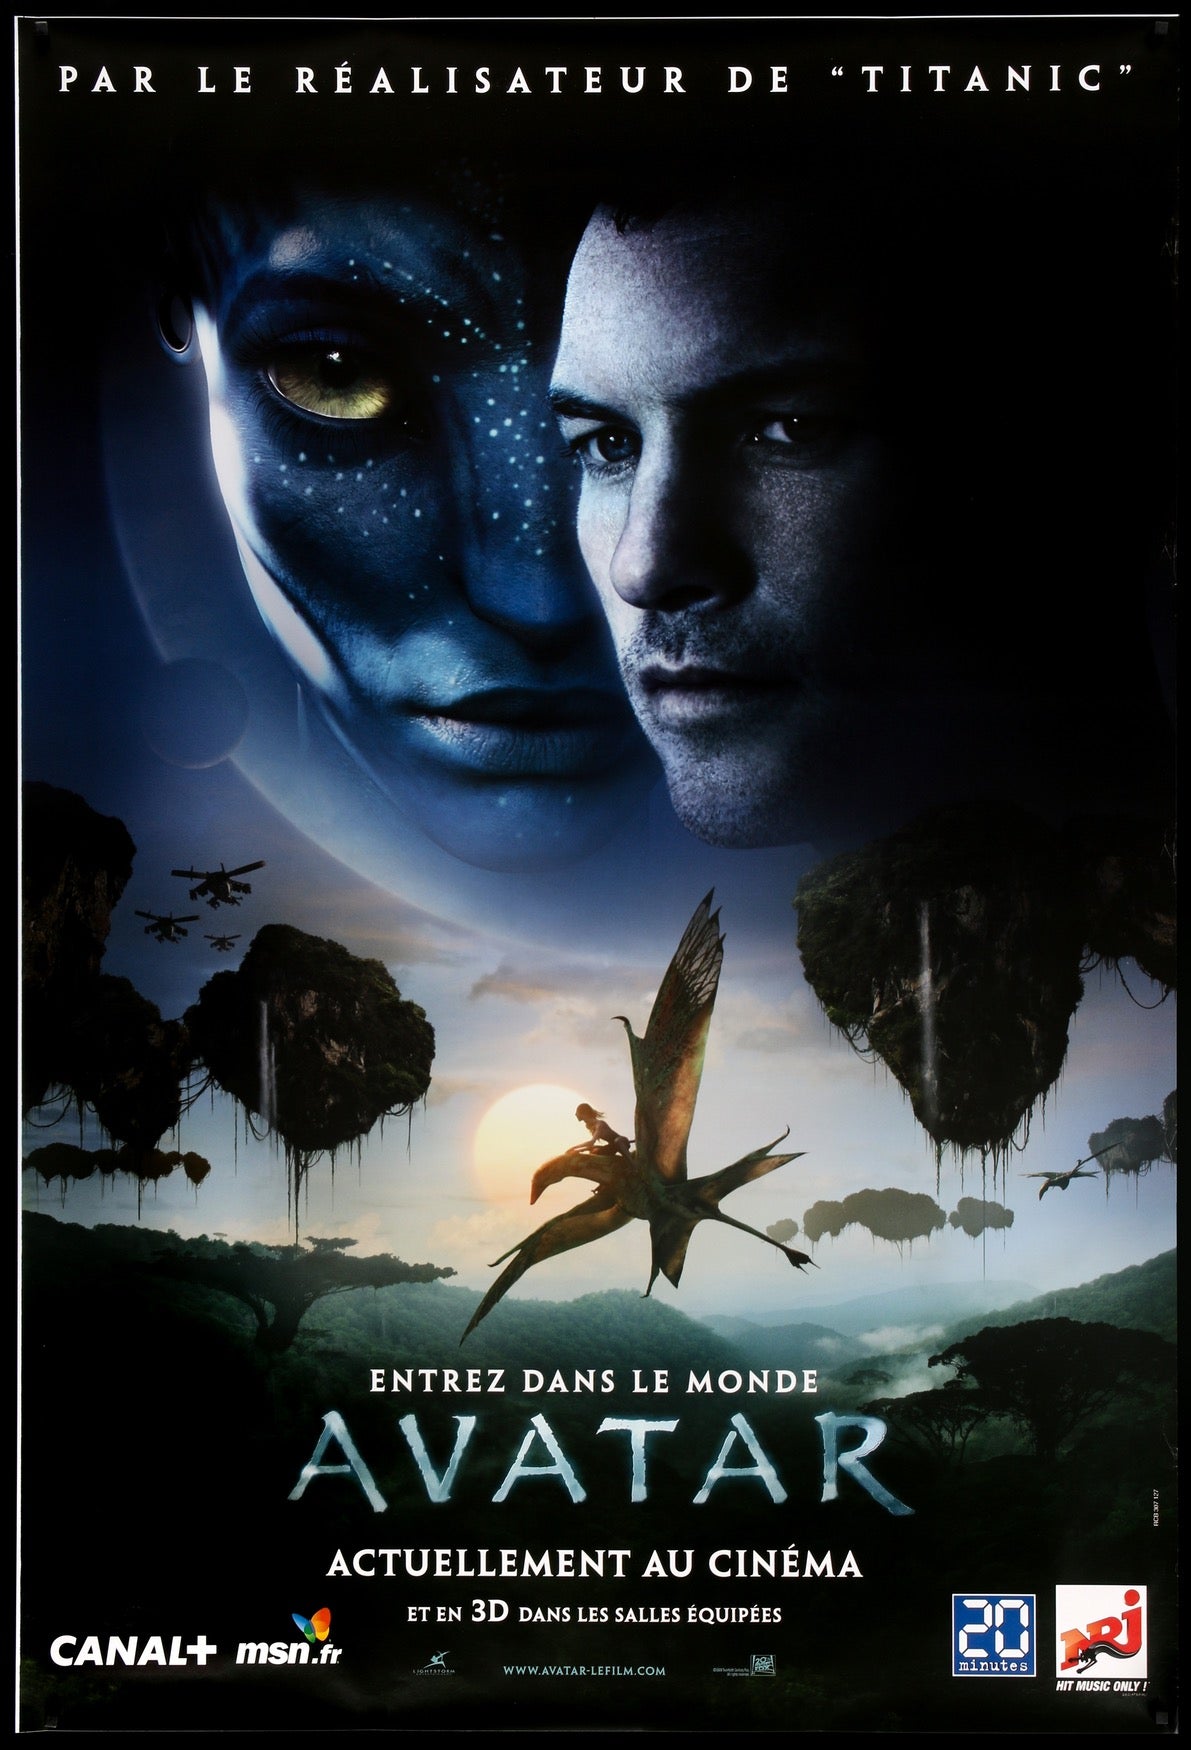 Avatar  2009  Original Movie Poster  Art of the Movies